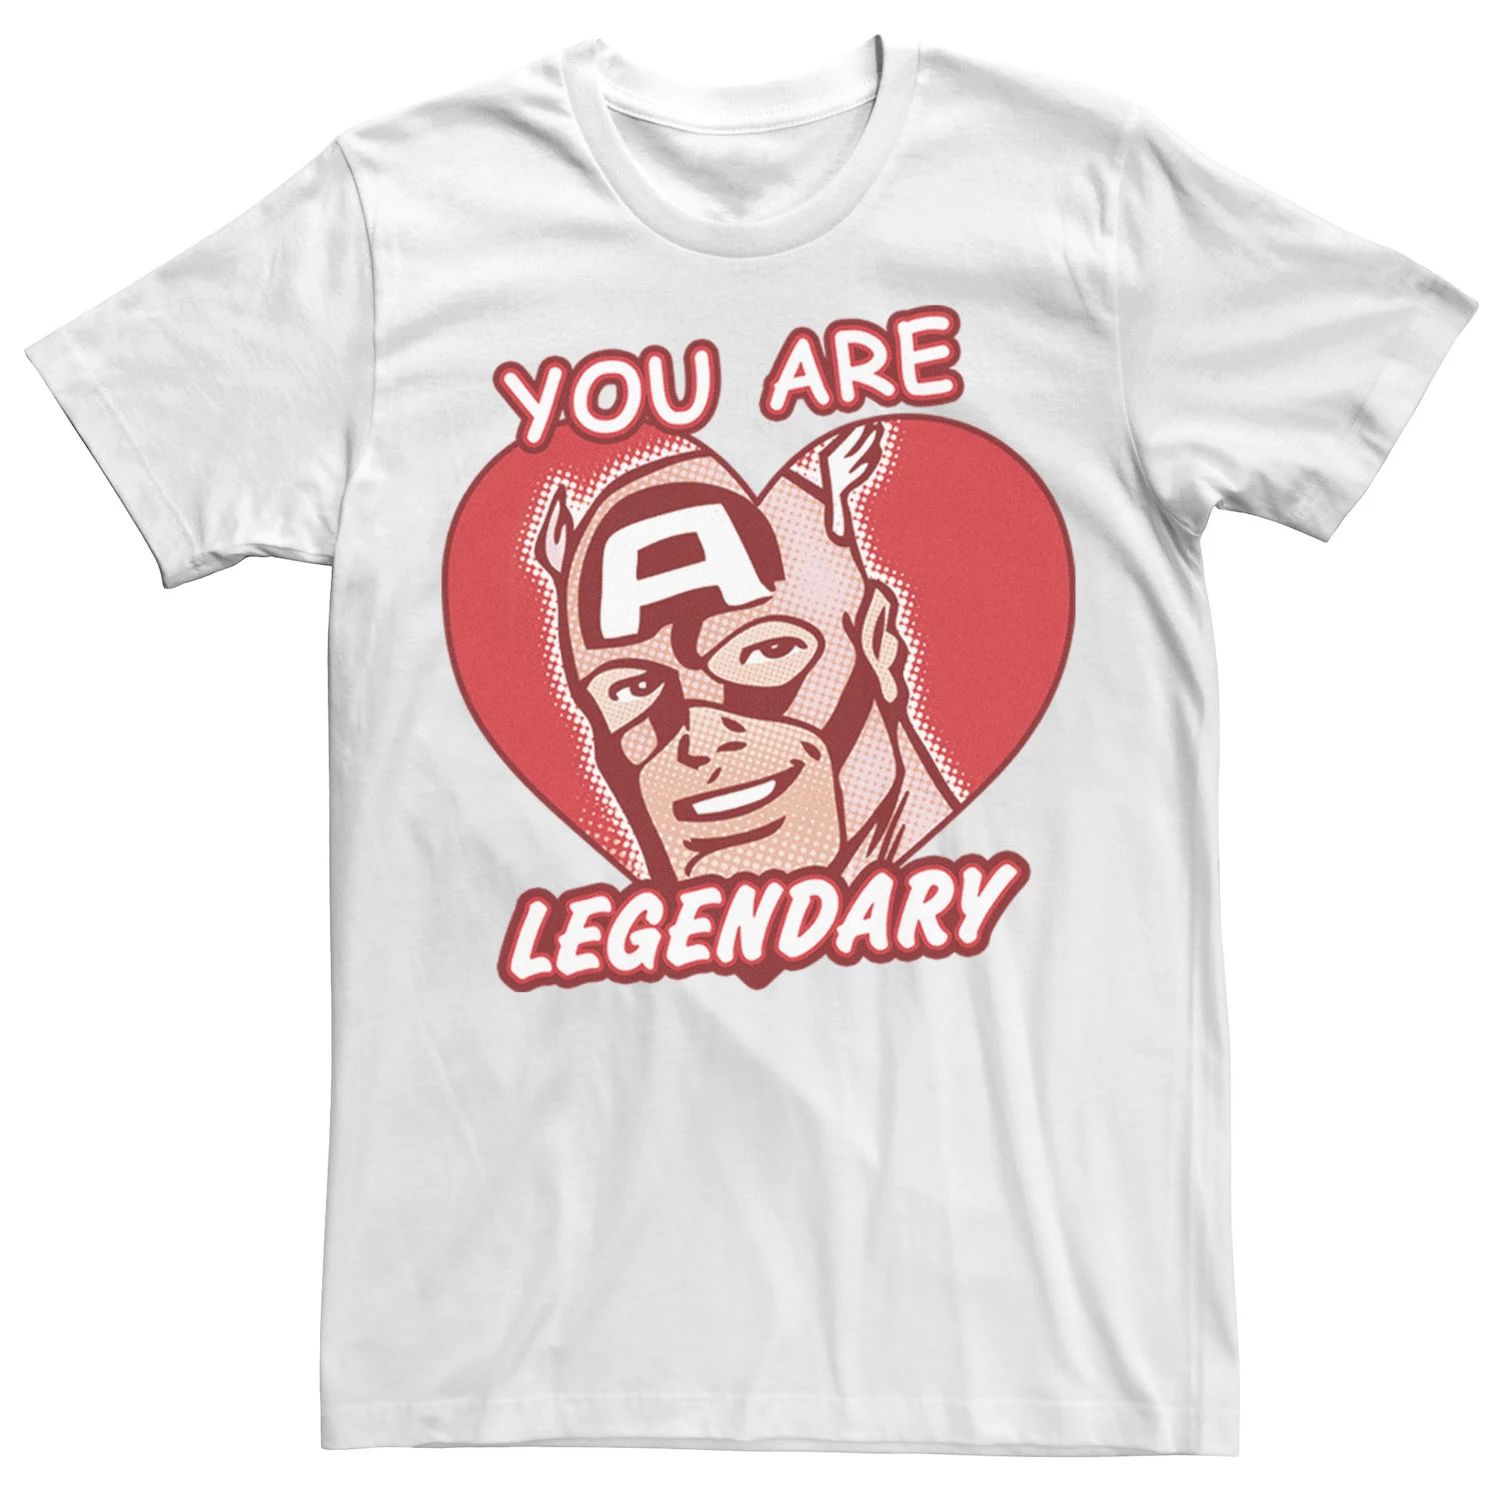 Мужская футболка с изображением комиксов Marvel Legendary Heart Licensed Character